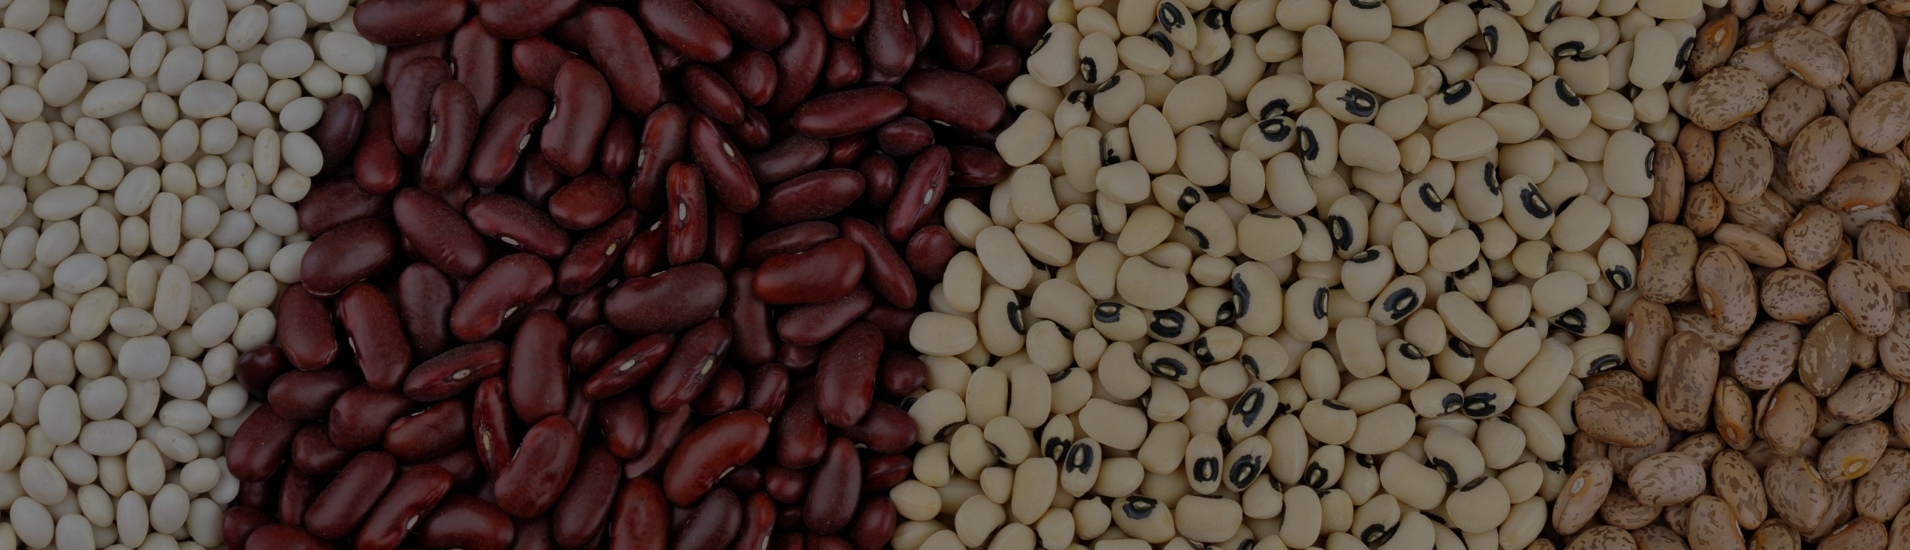 Beans Packaging Machine